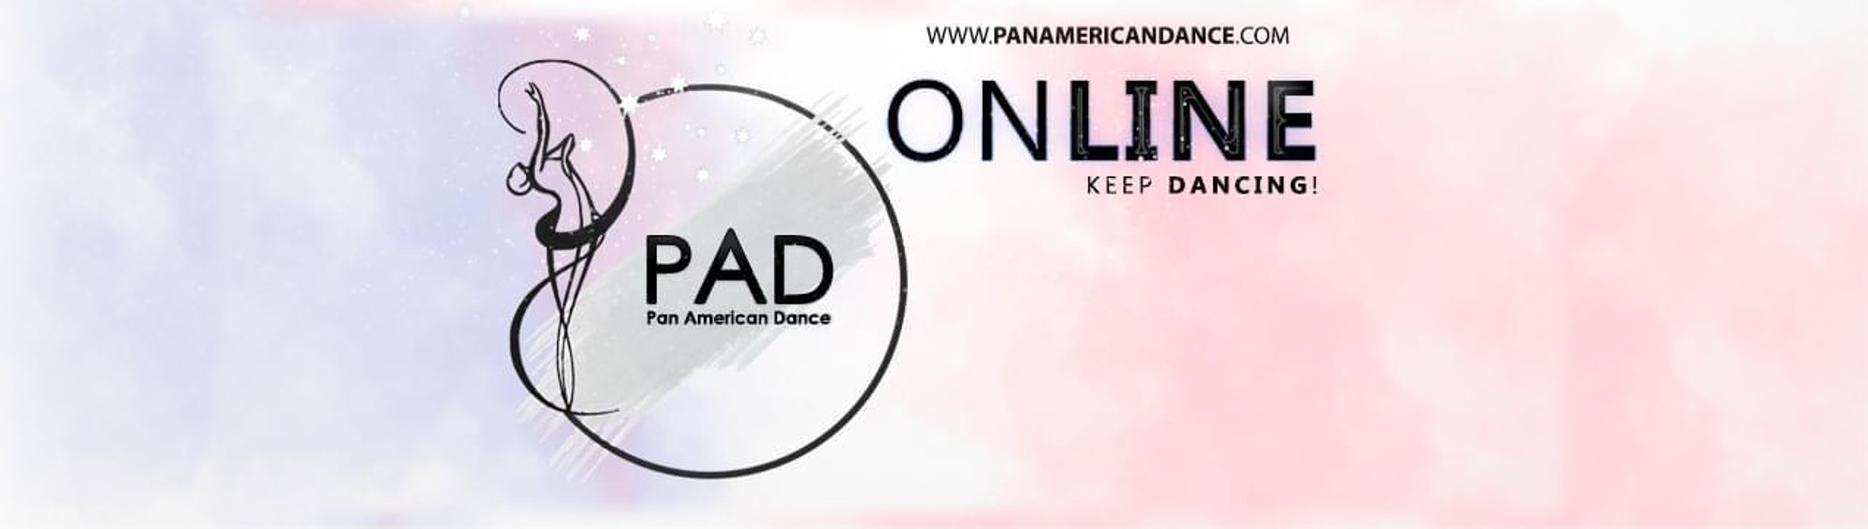 Pan American Dance Online